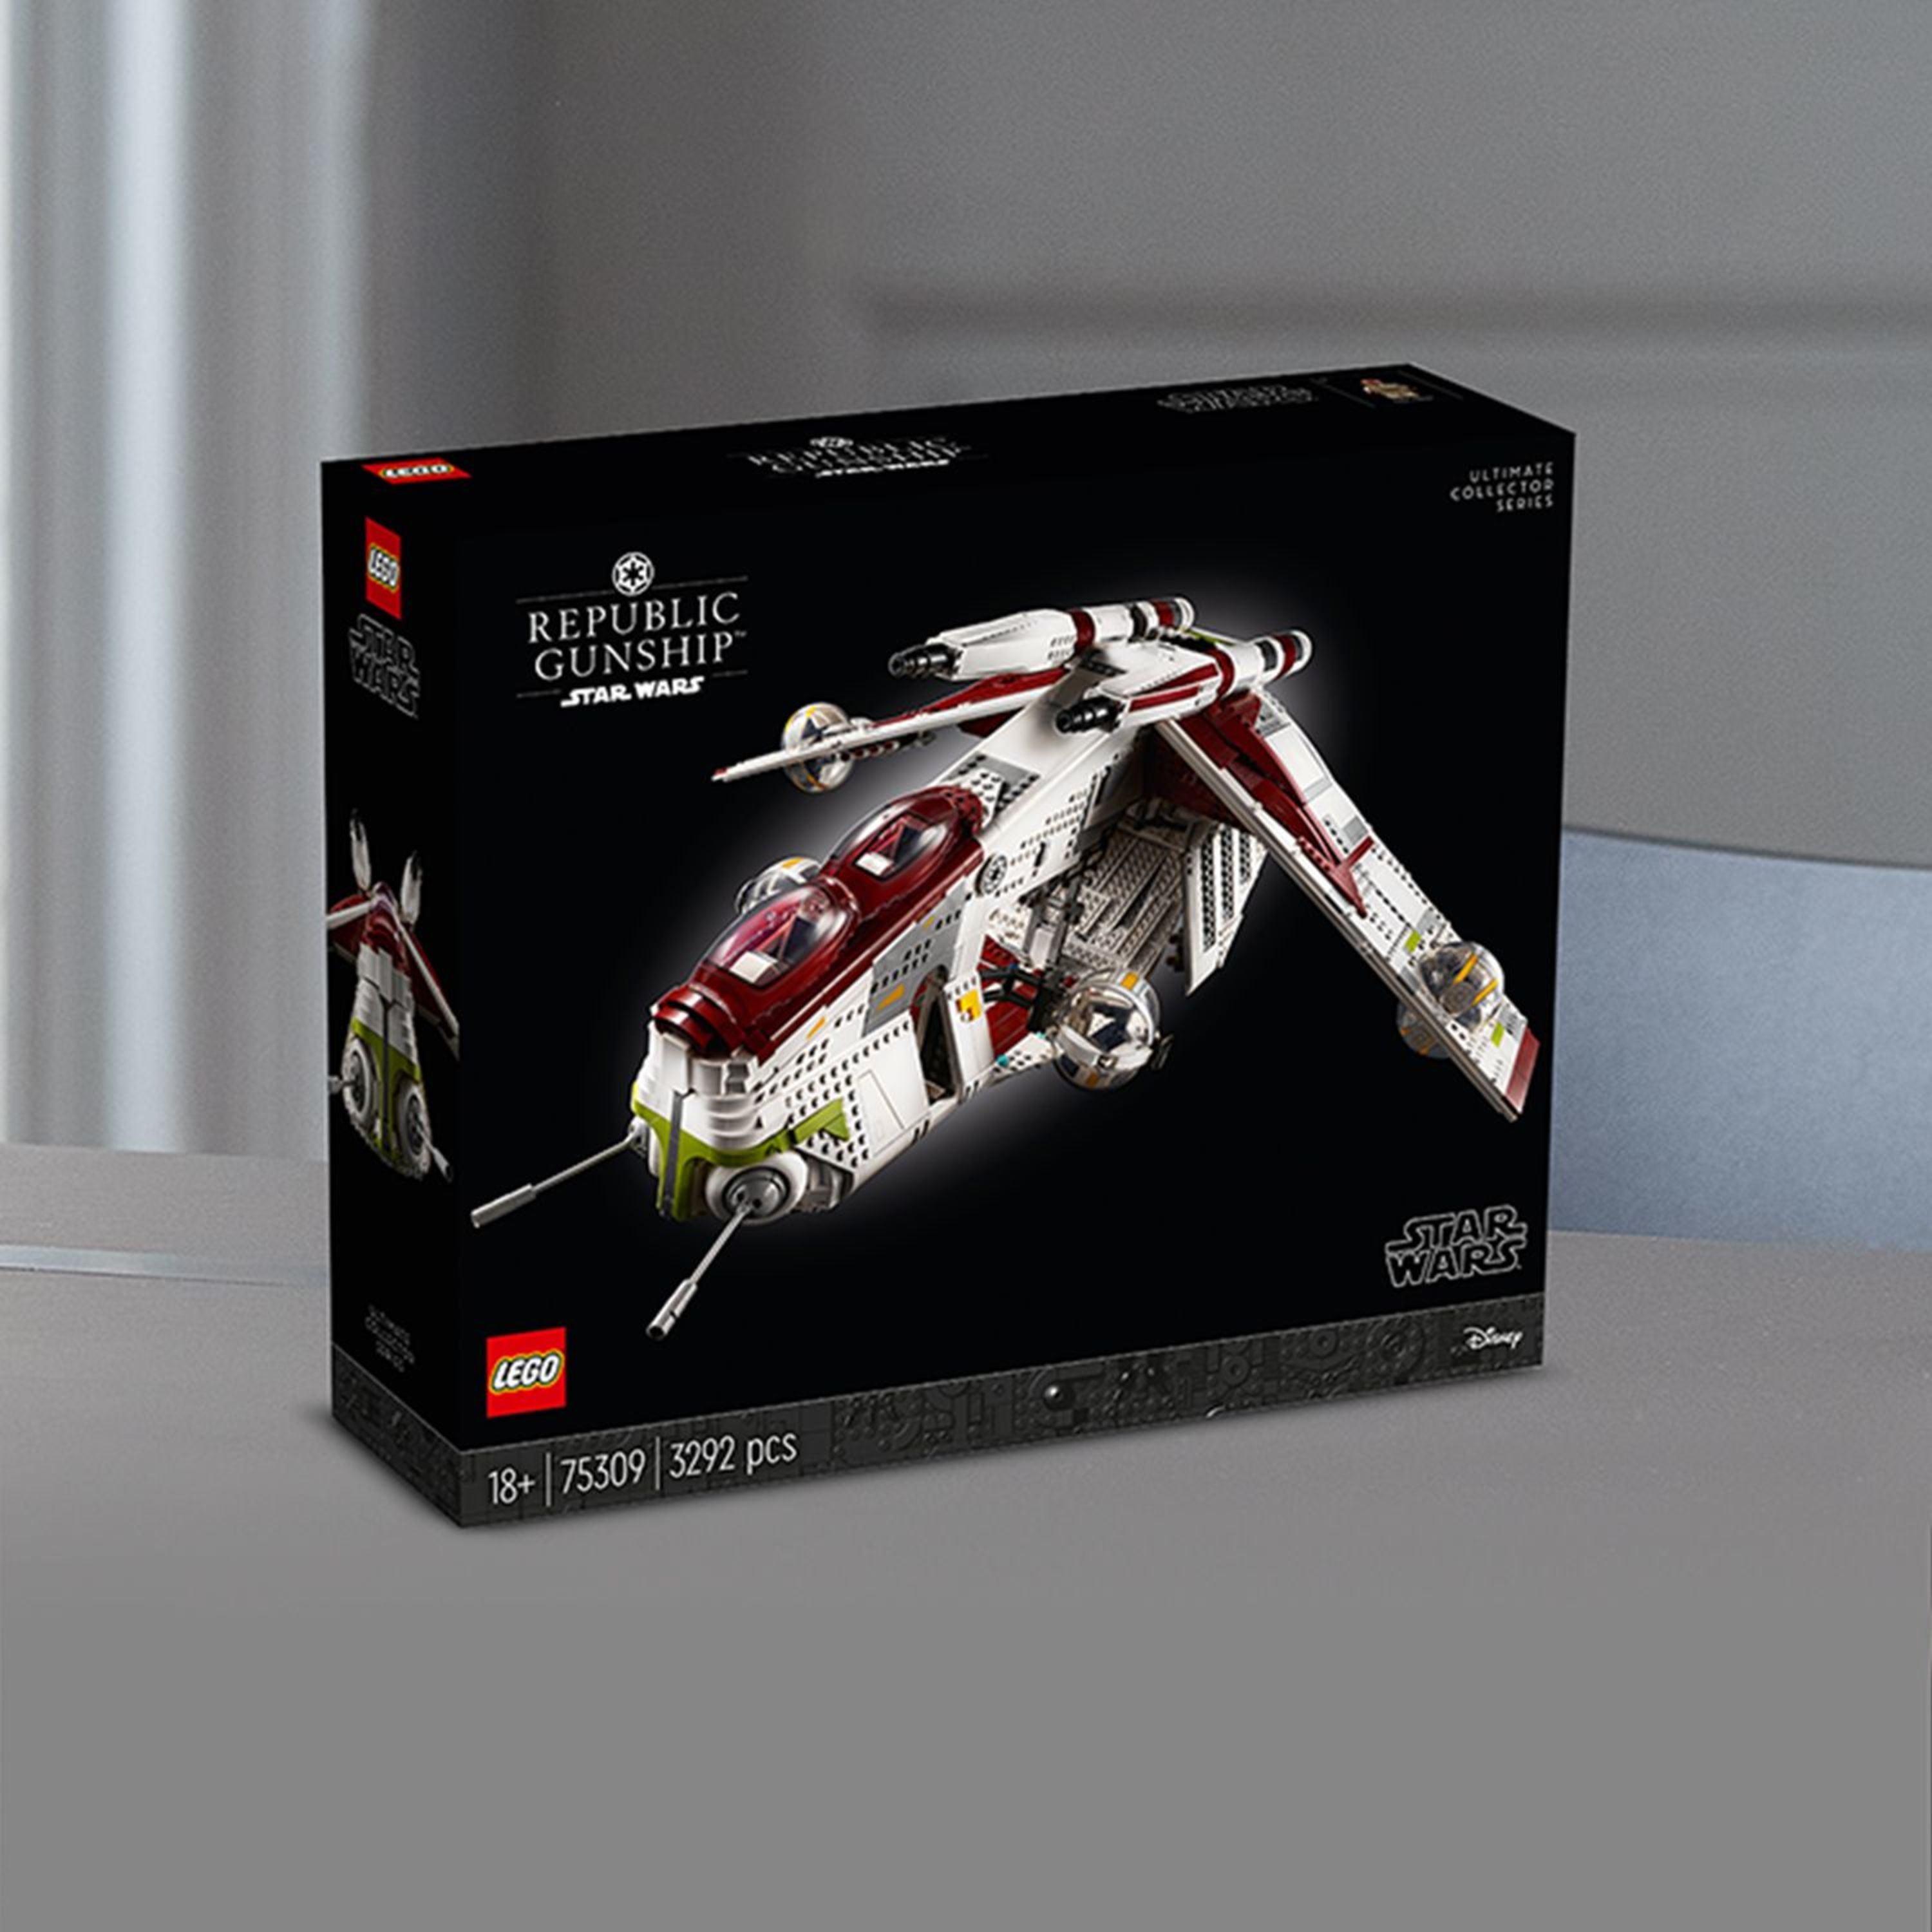 LEGO Star Wars Republic Gunship 75309 UCS Display Model Kit 